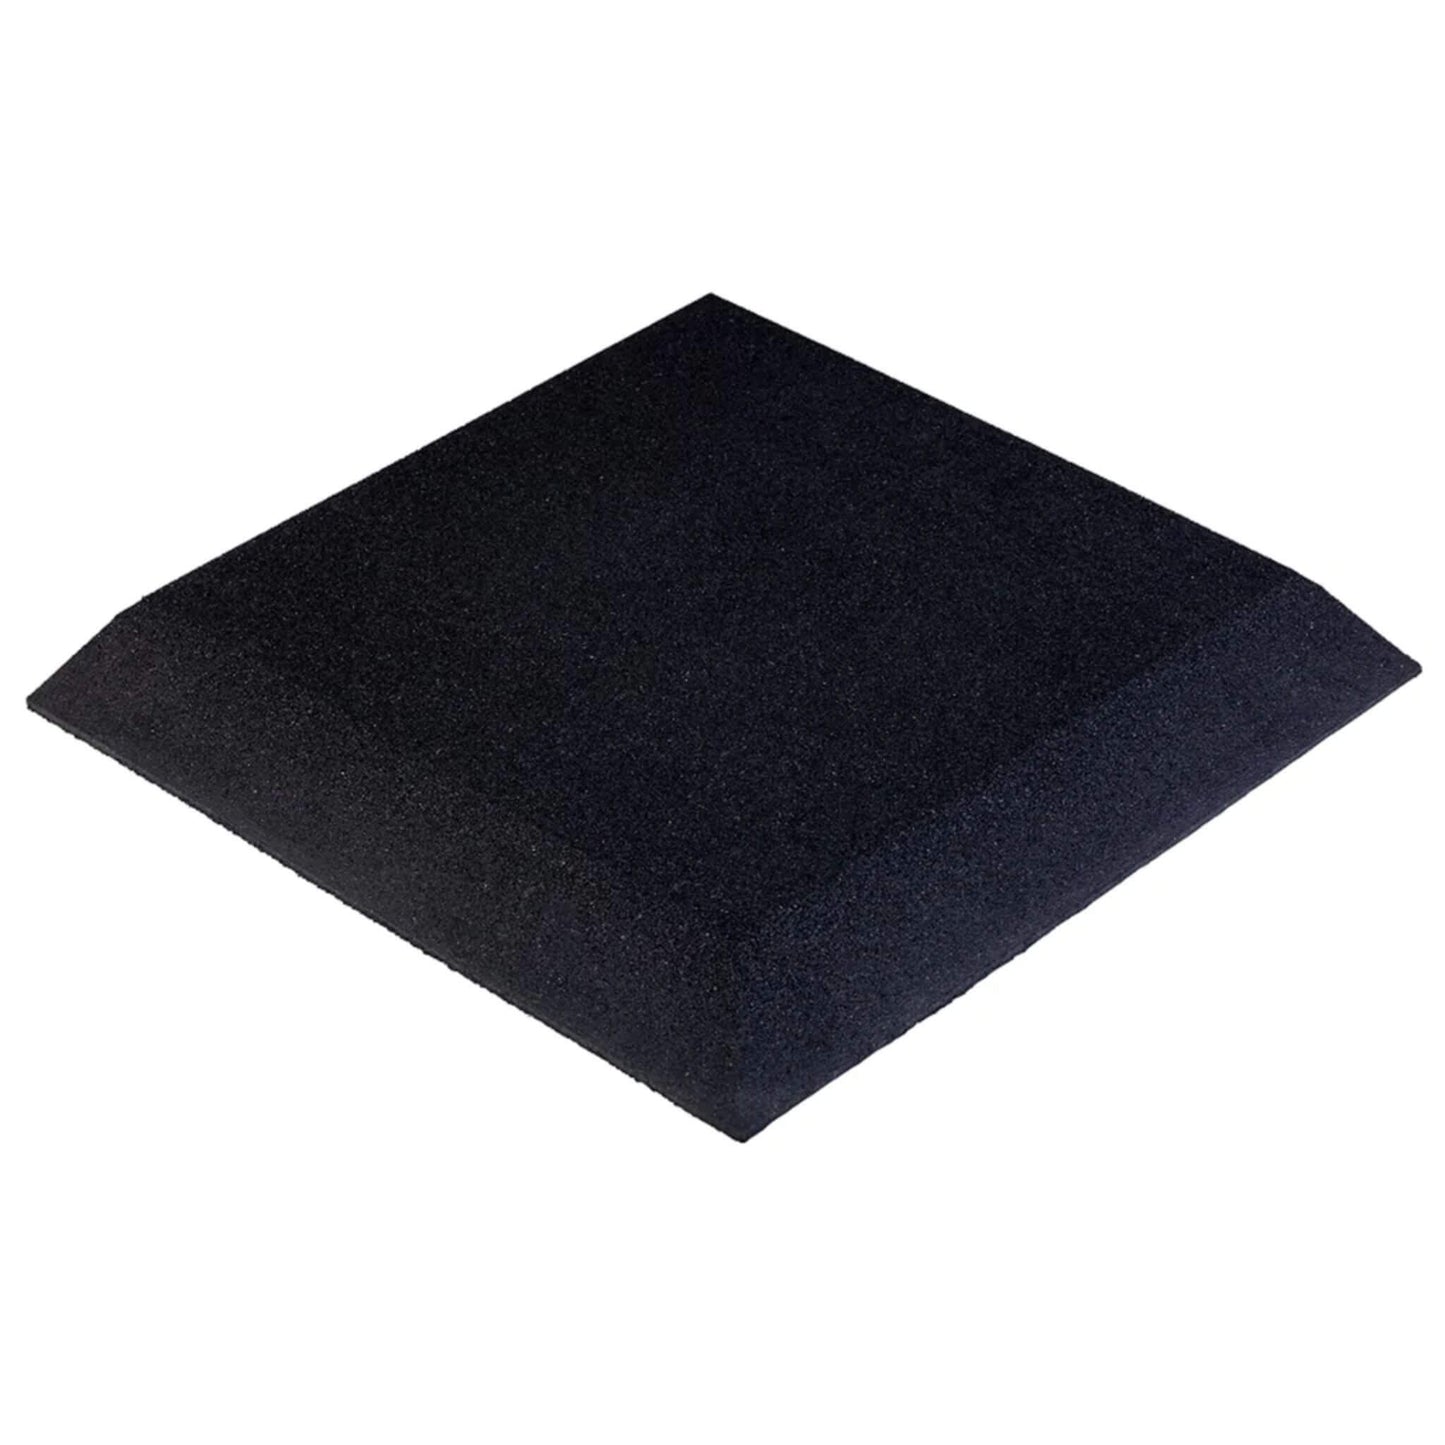 Activ Gym Flooring Tiles (Black) 50cm x 50cm x 30mm corner